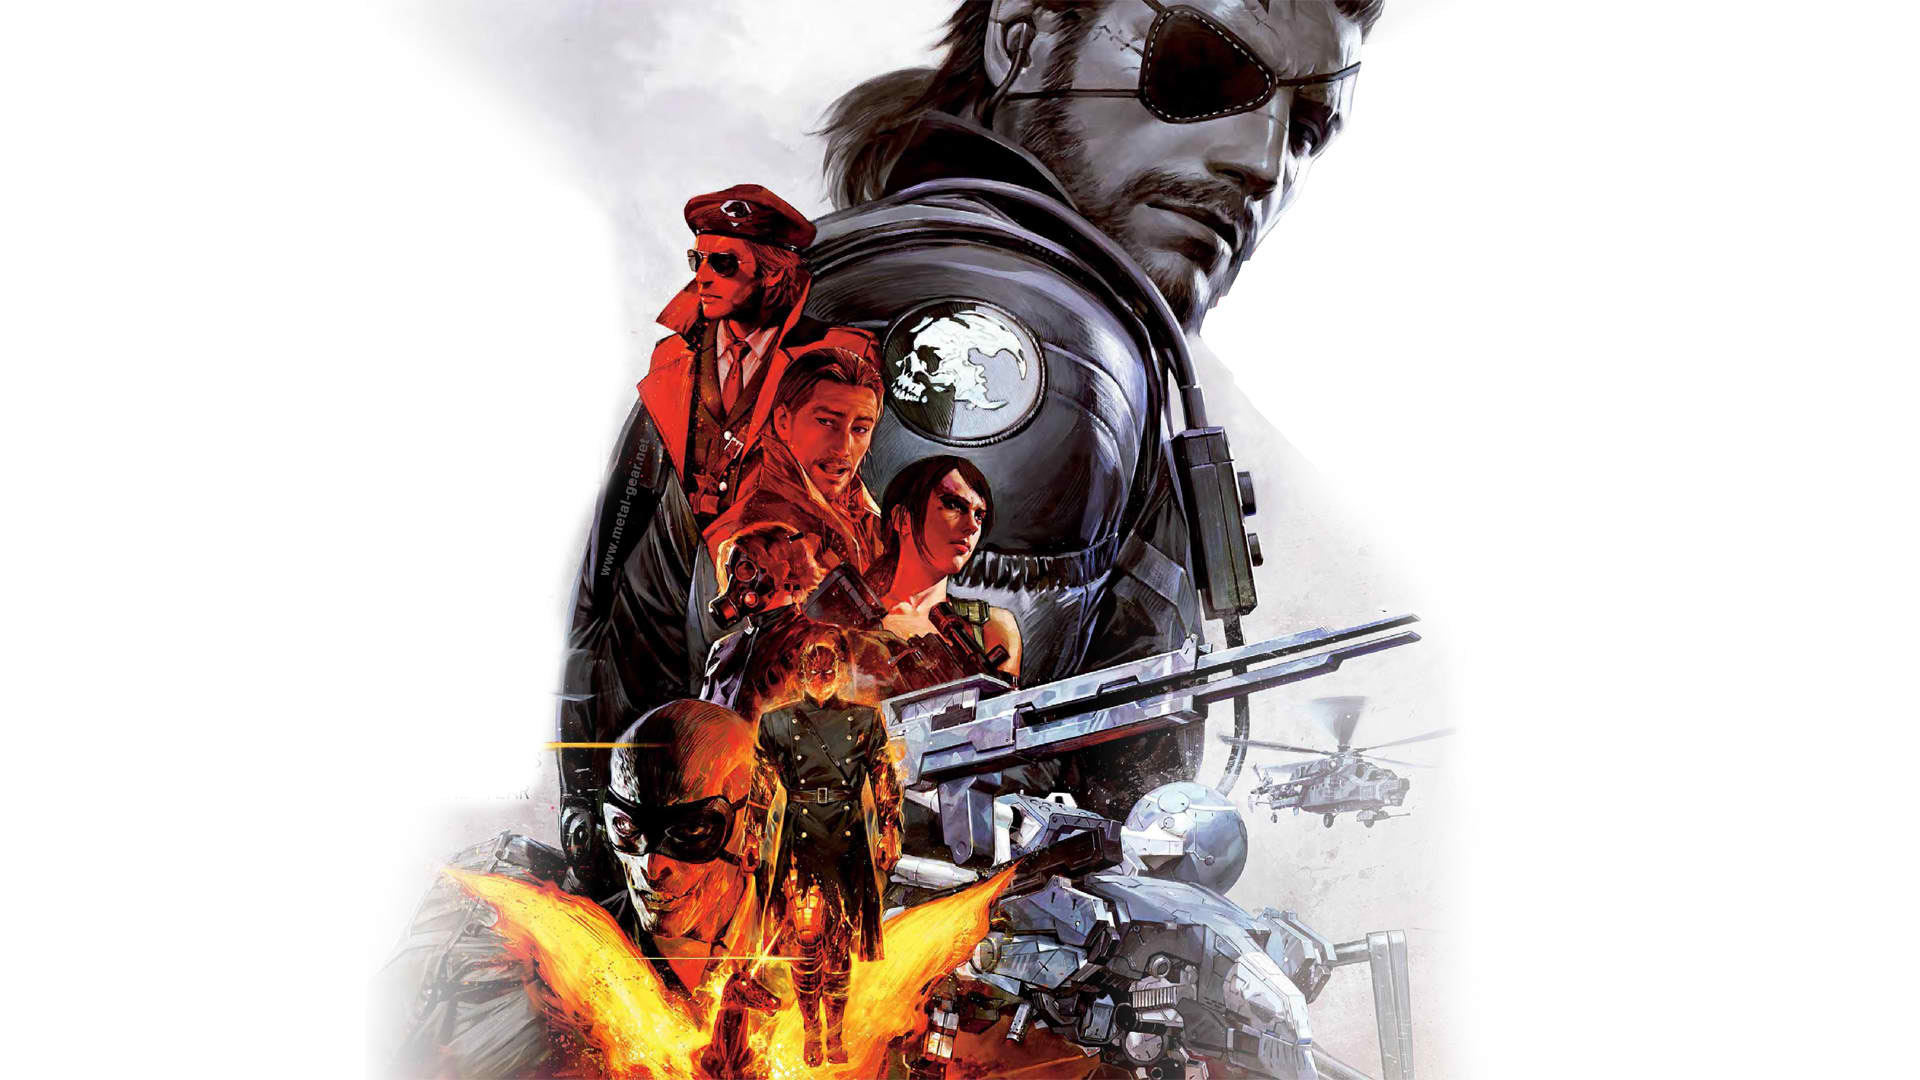 Metal Gear Solid V The Phantom Pain Wallpaper in 1920x1080